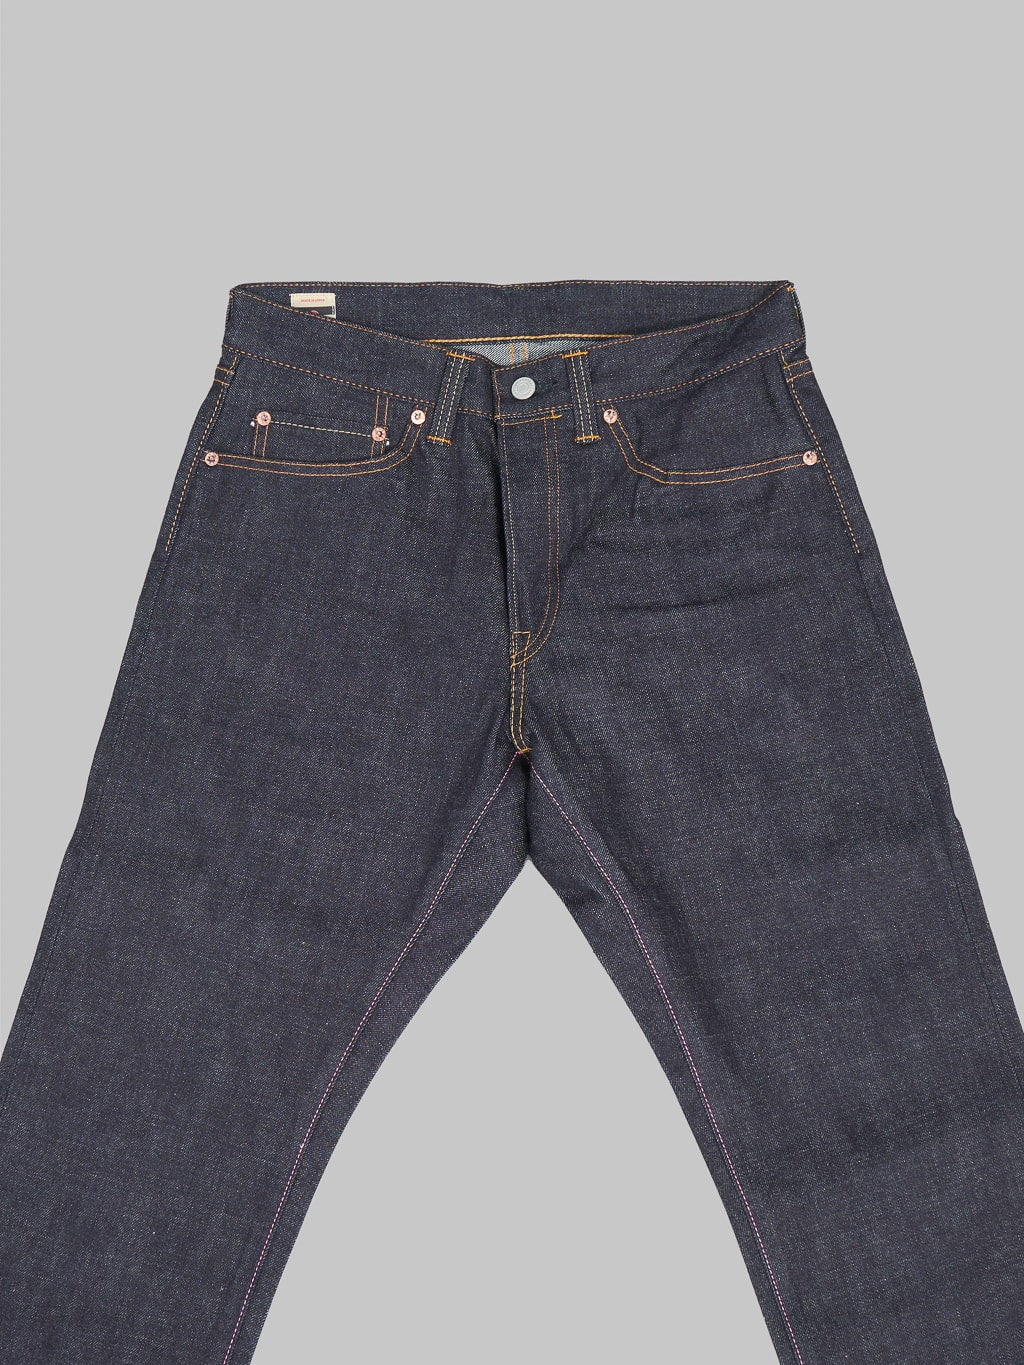 momotaro 0605 13 indigo jeans natural tapered 13oz waist